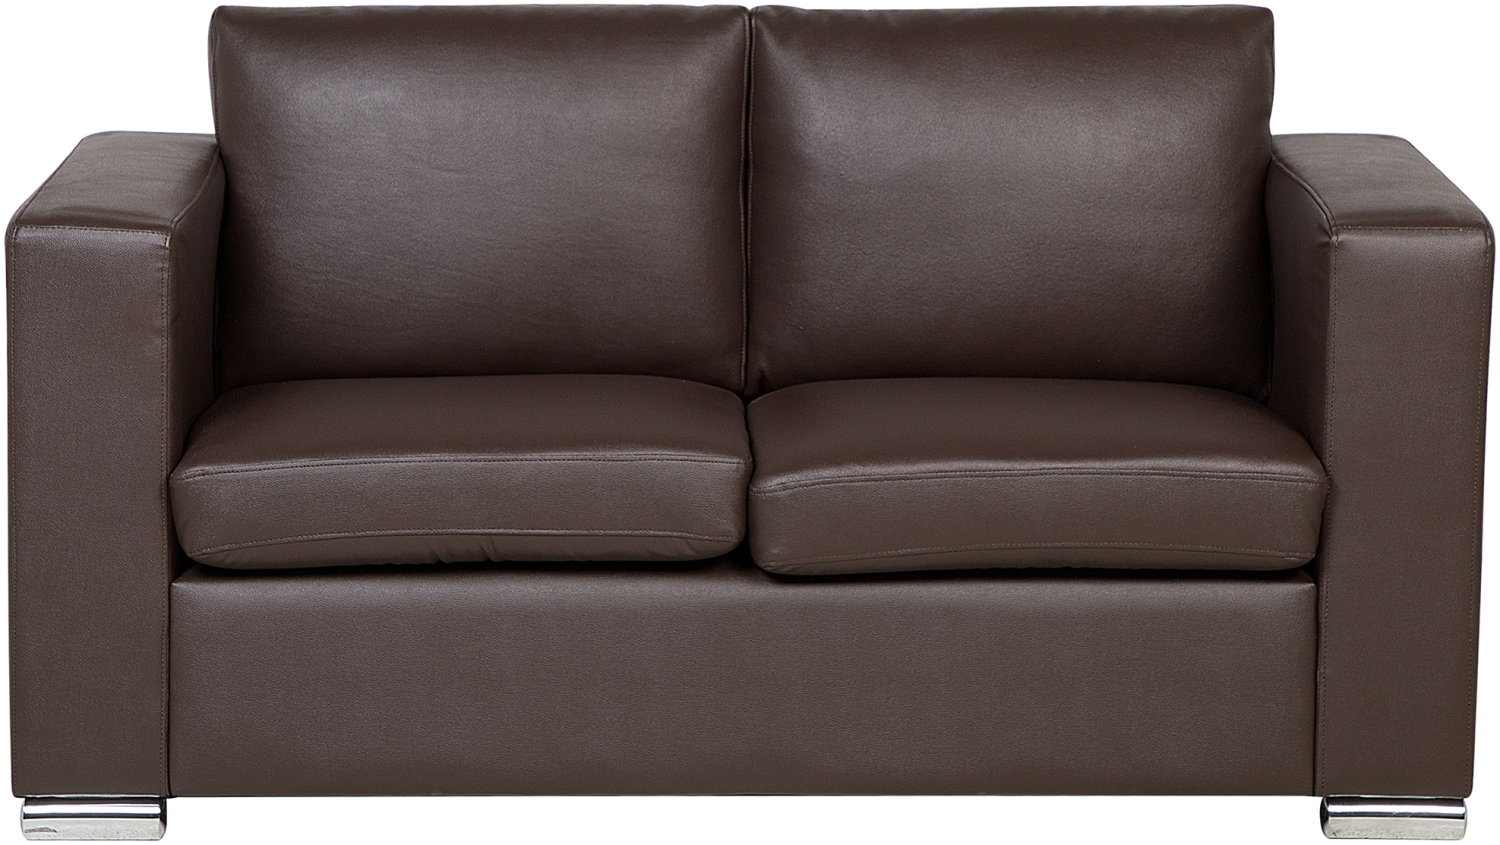 2-Sitzer Sofa Leder braun HELSINKI Bild 1